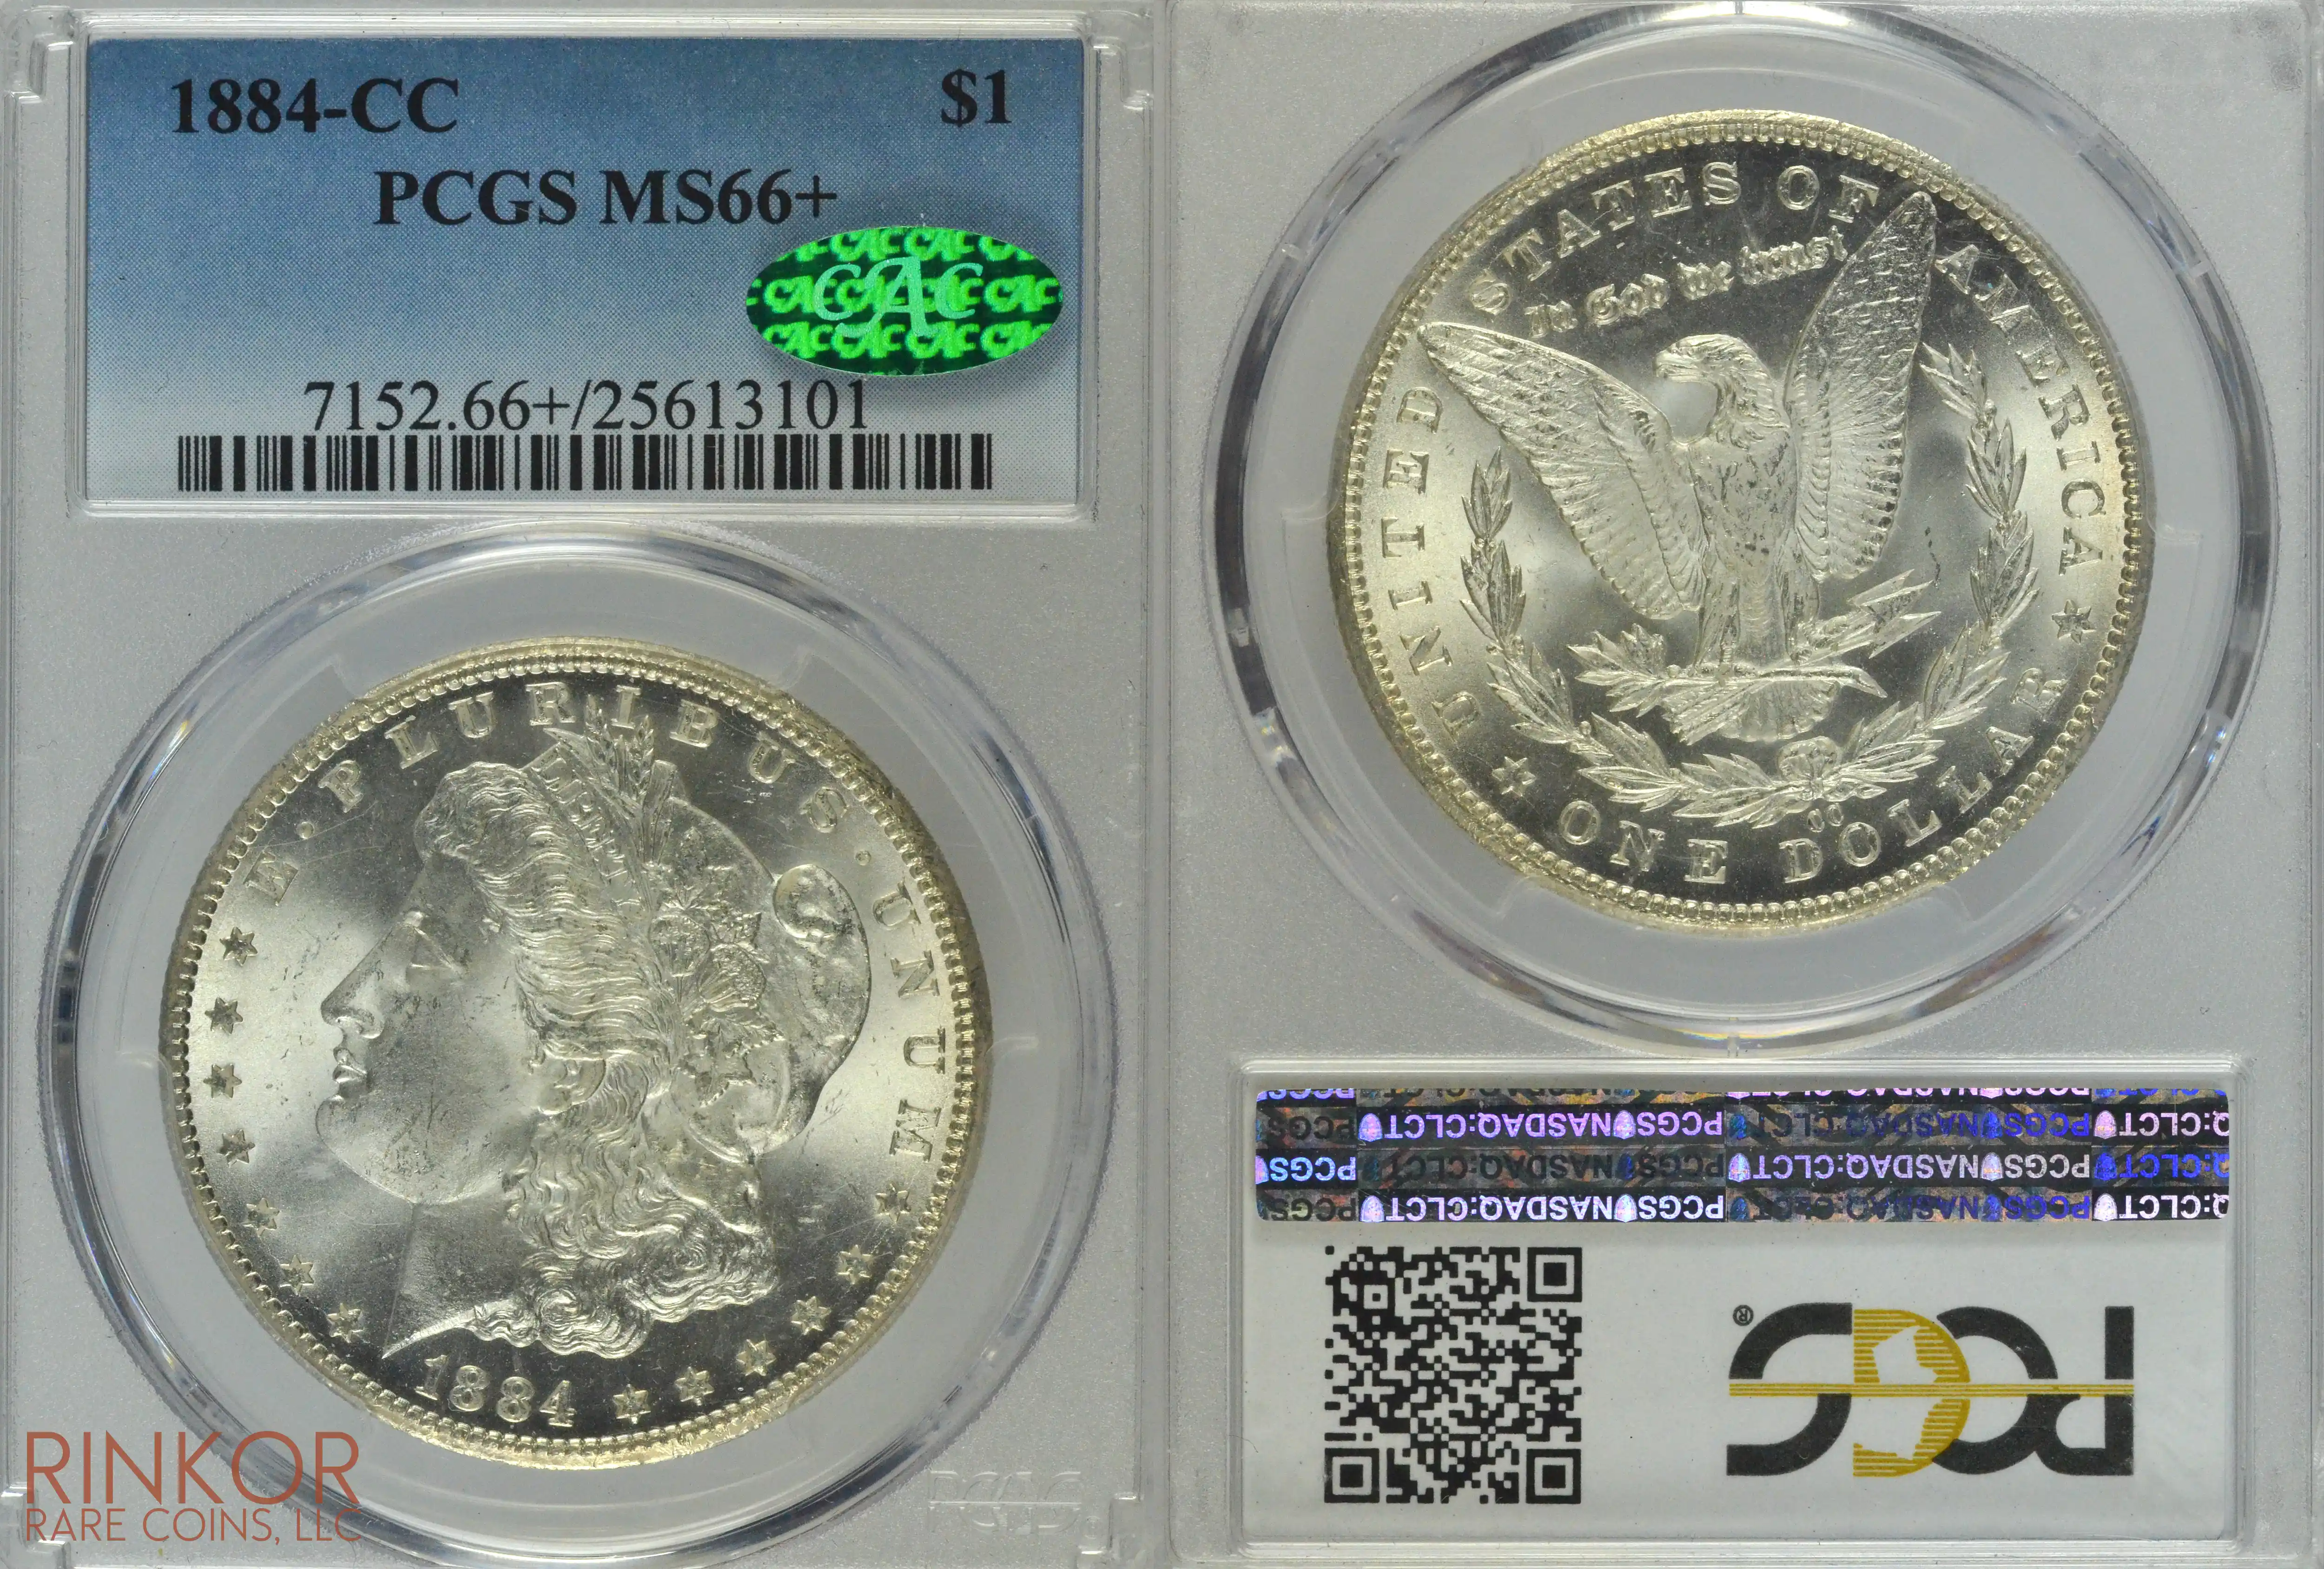 1884-CC $1 PCGS MS 66+ CAC